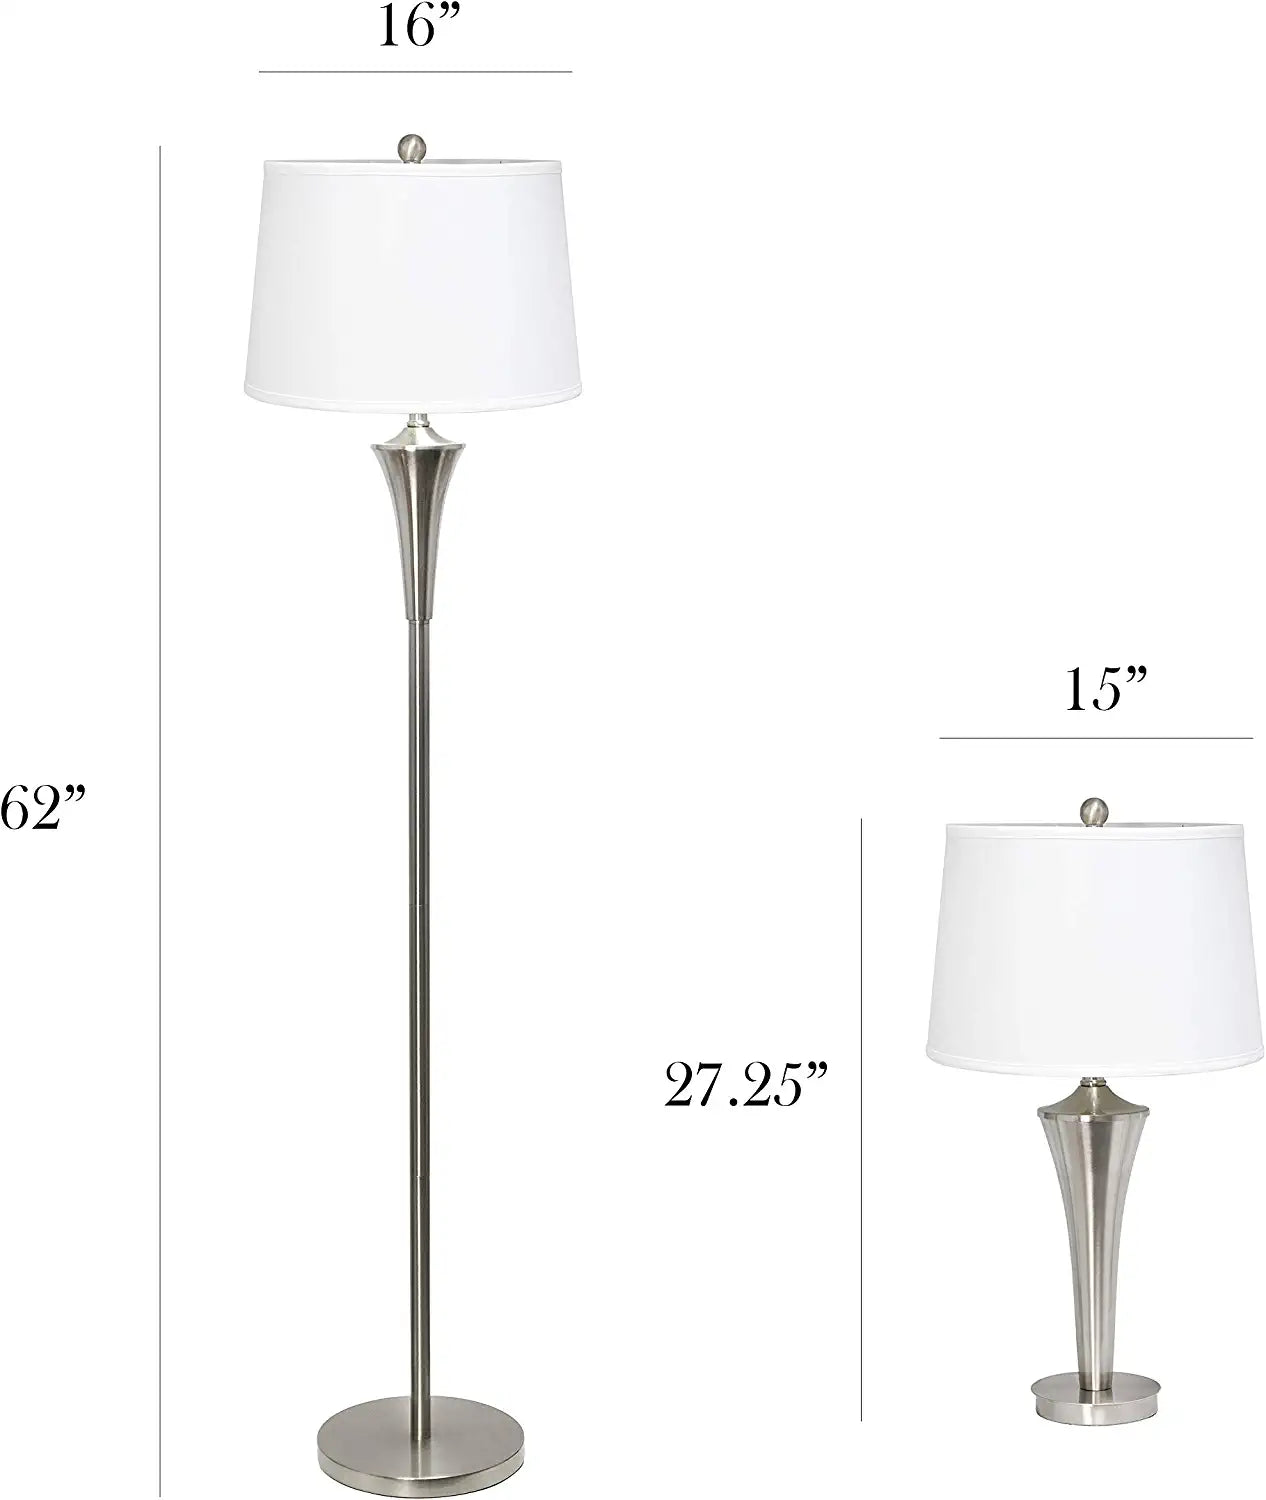 Elegant Designs LC1020-BSN 3 Pack Lamp Set, Brushed Nickel